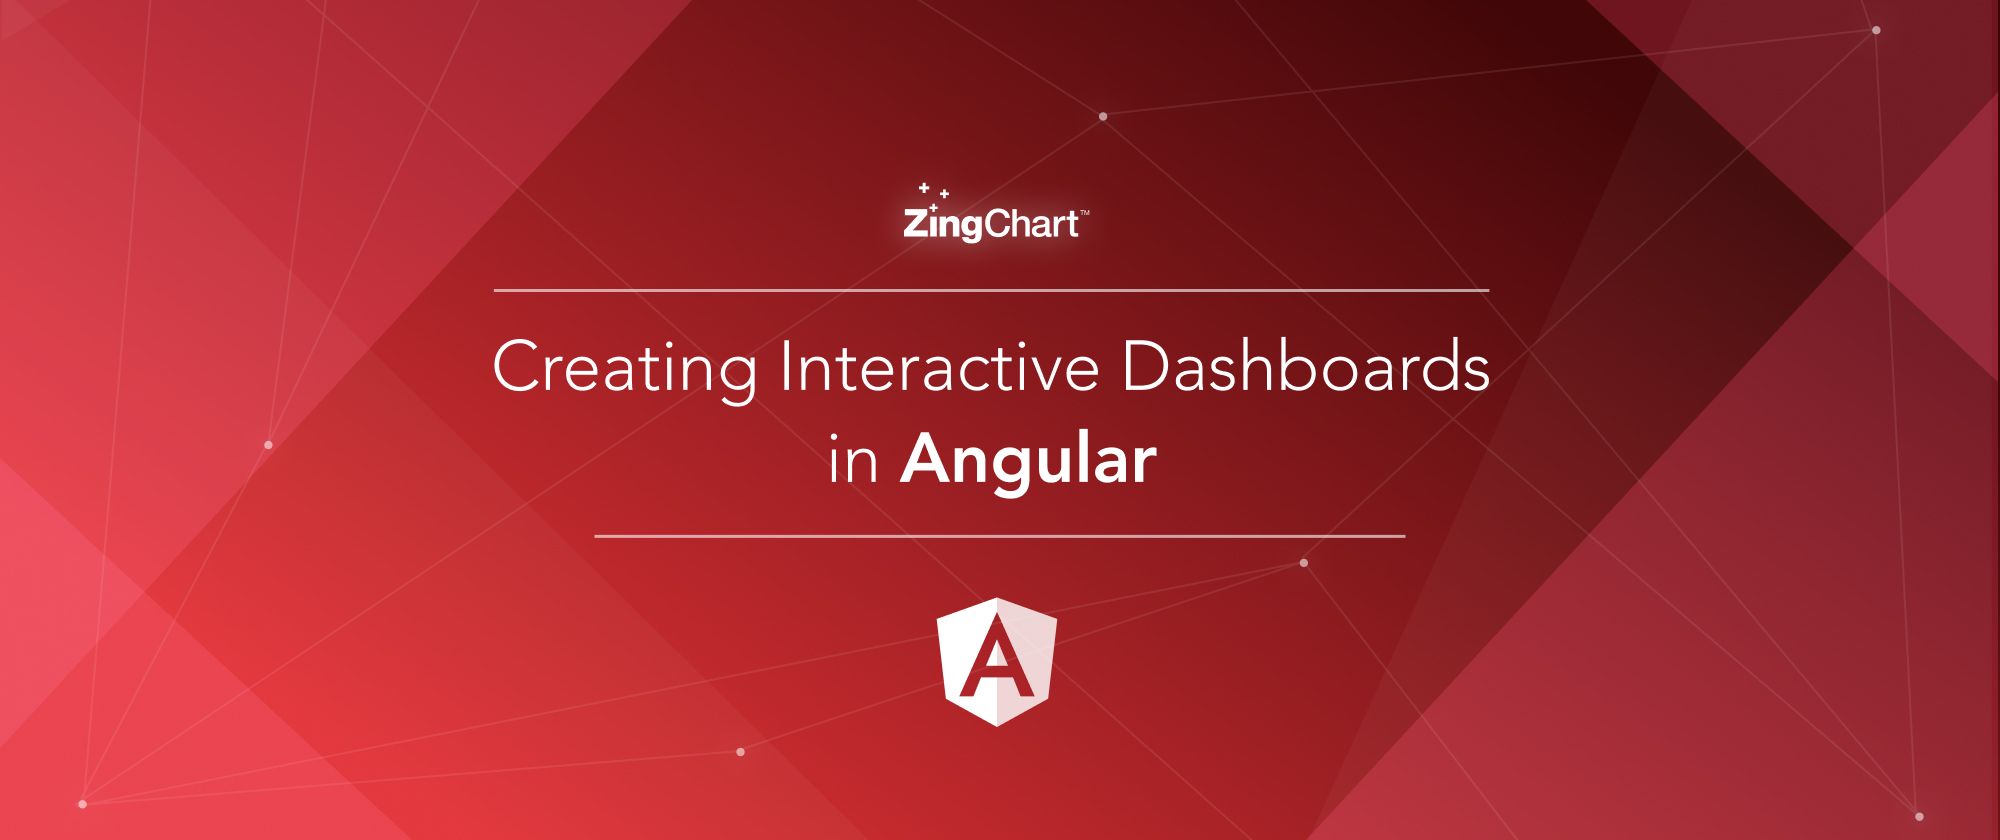 Creating Interactive Dashboards in Angular